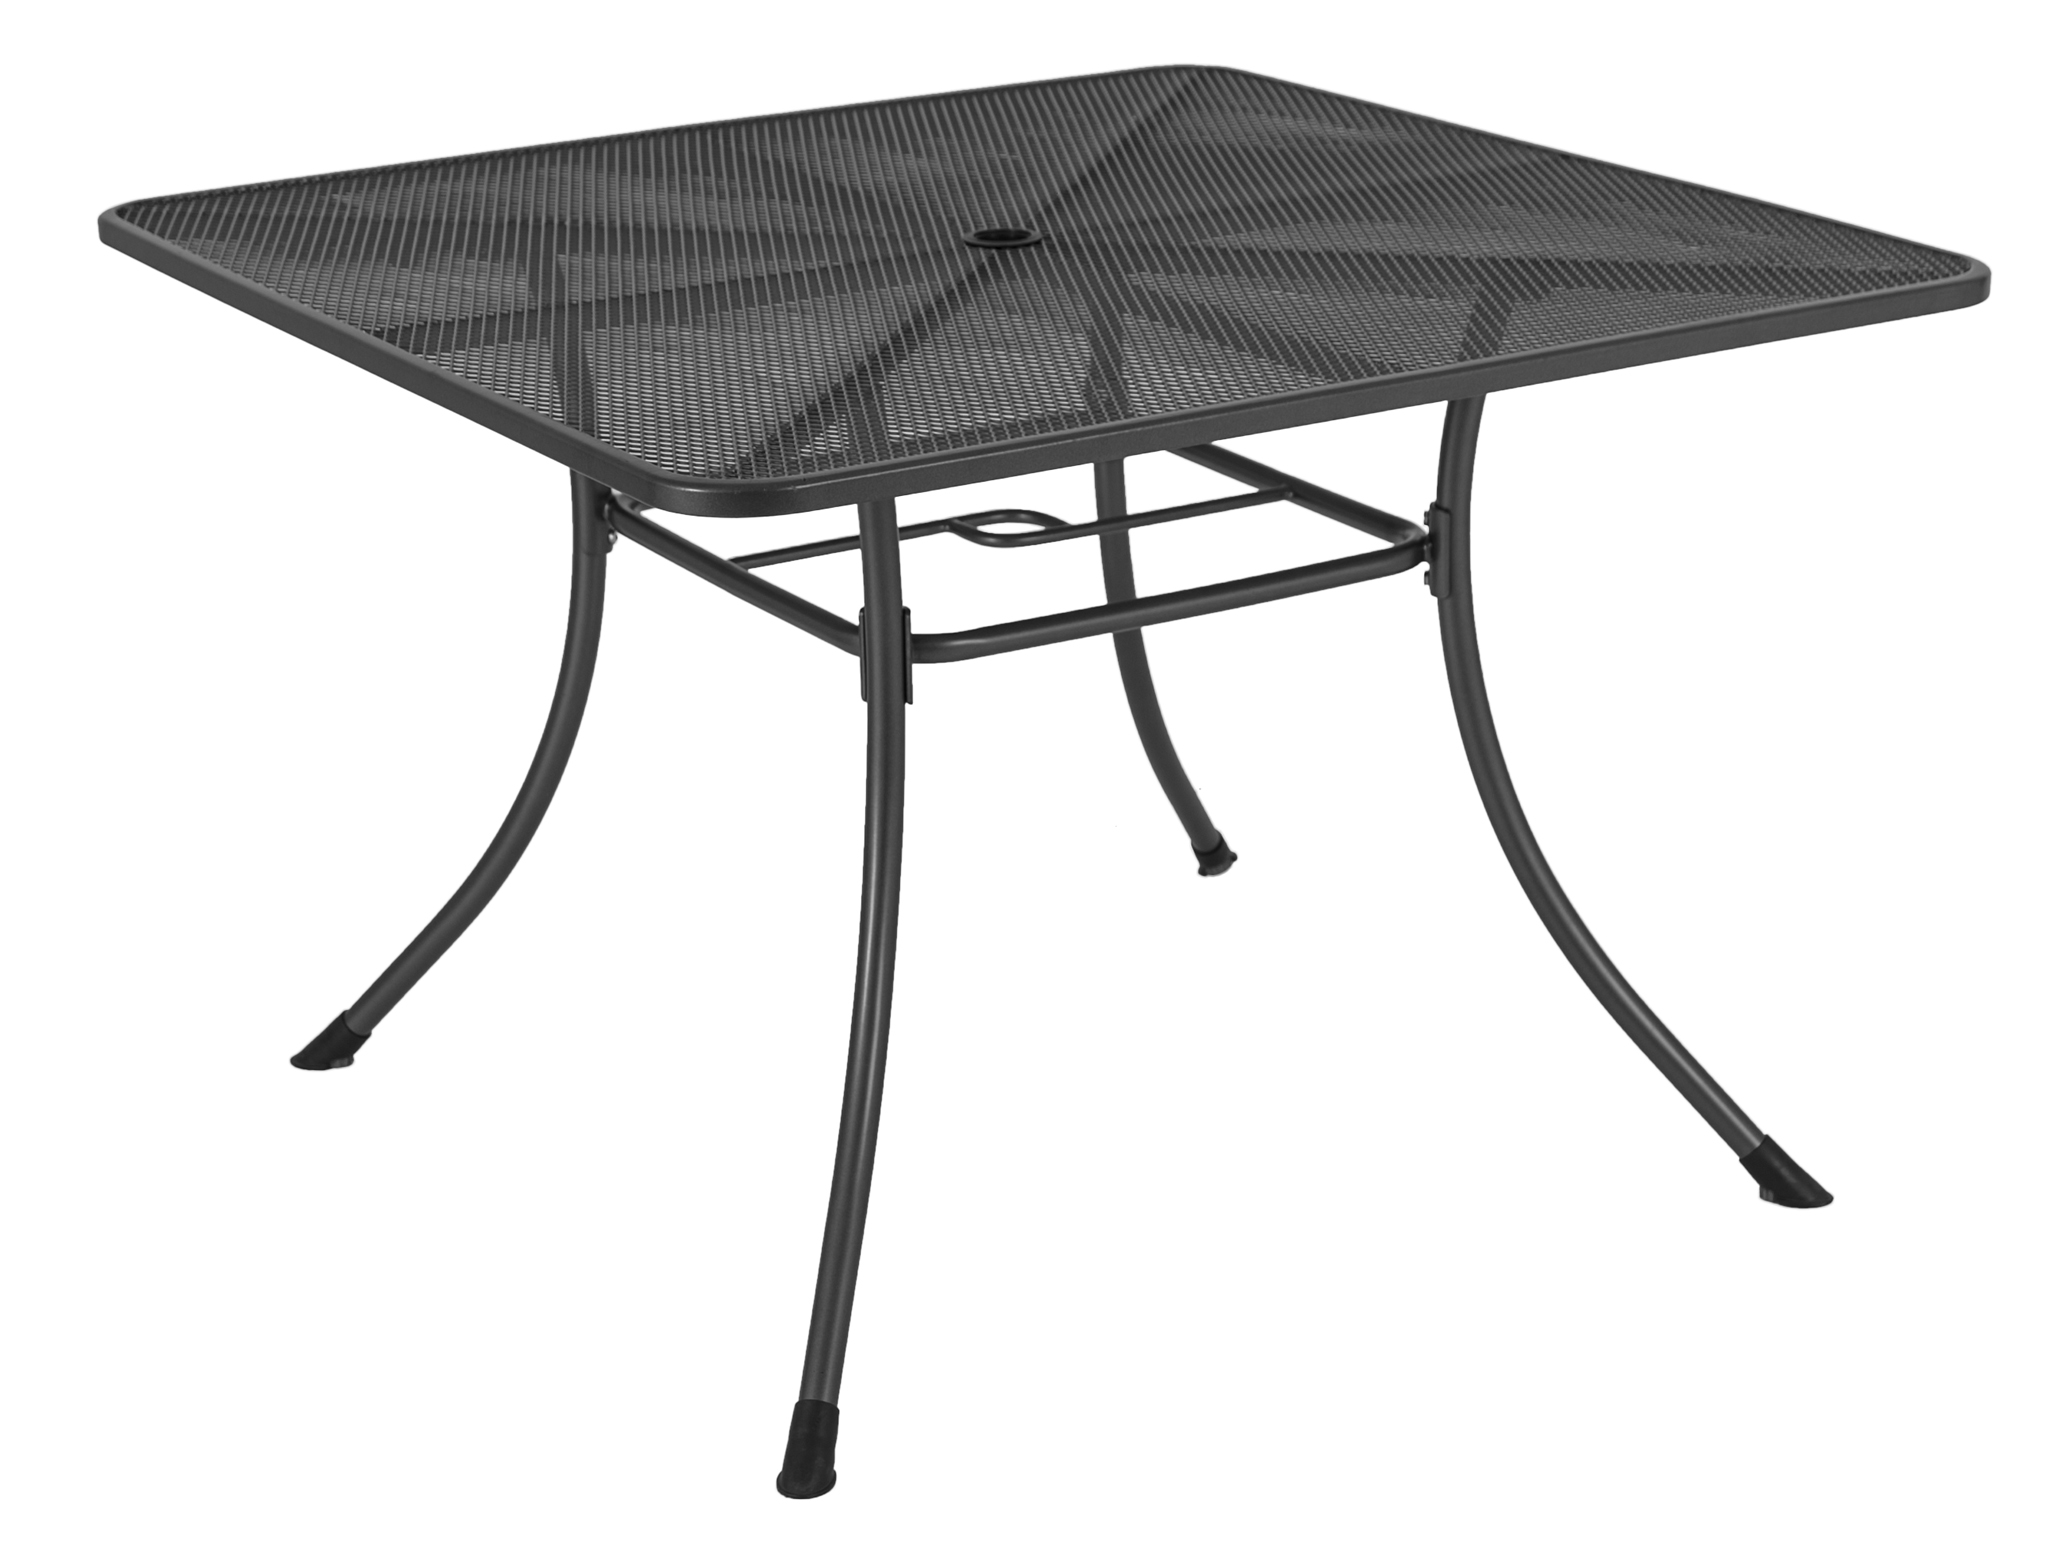 Portofino Square Table 1.1m x 1.1m